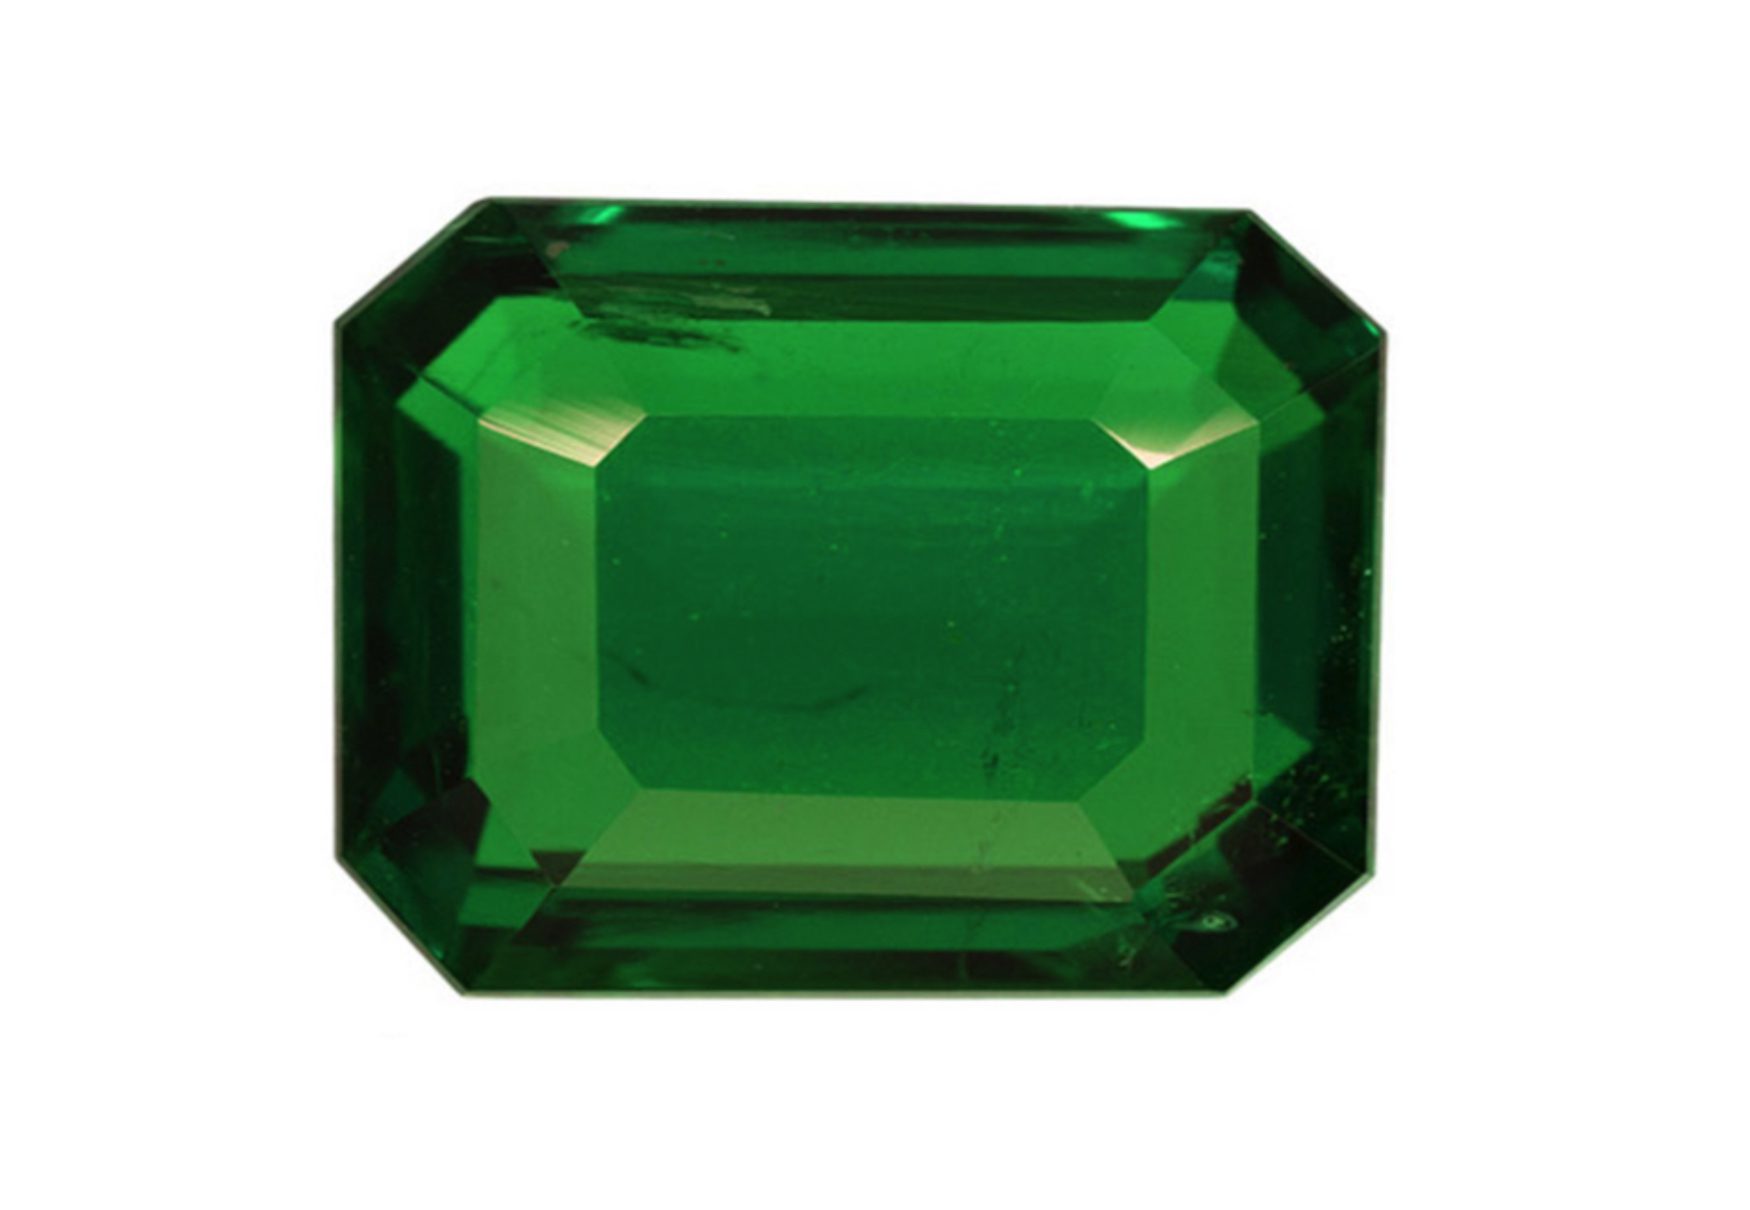 Emerald Grading Chart